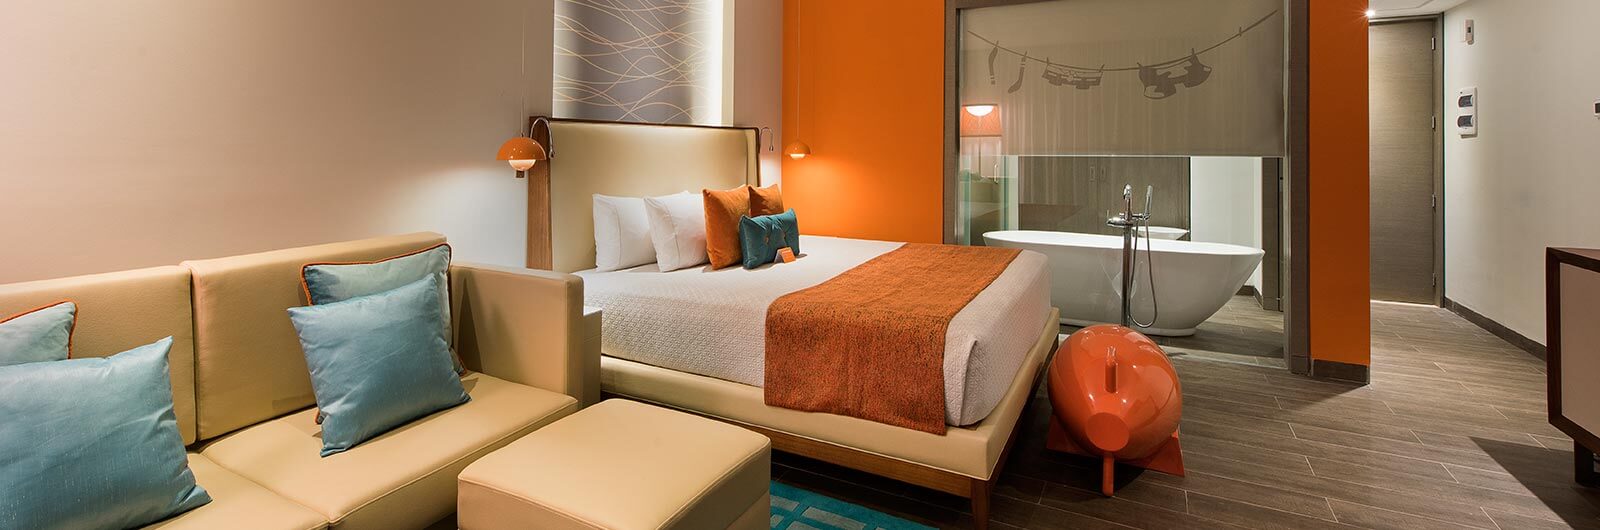 Nickelodeon Resort Punta Cana Accommodations - Nest Suite